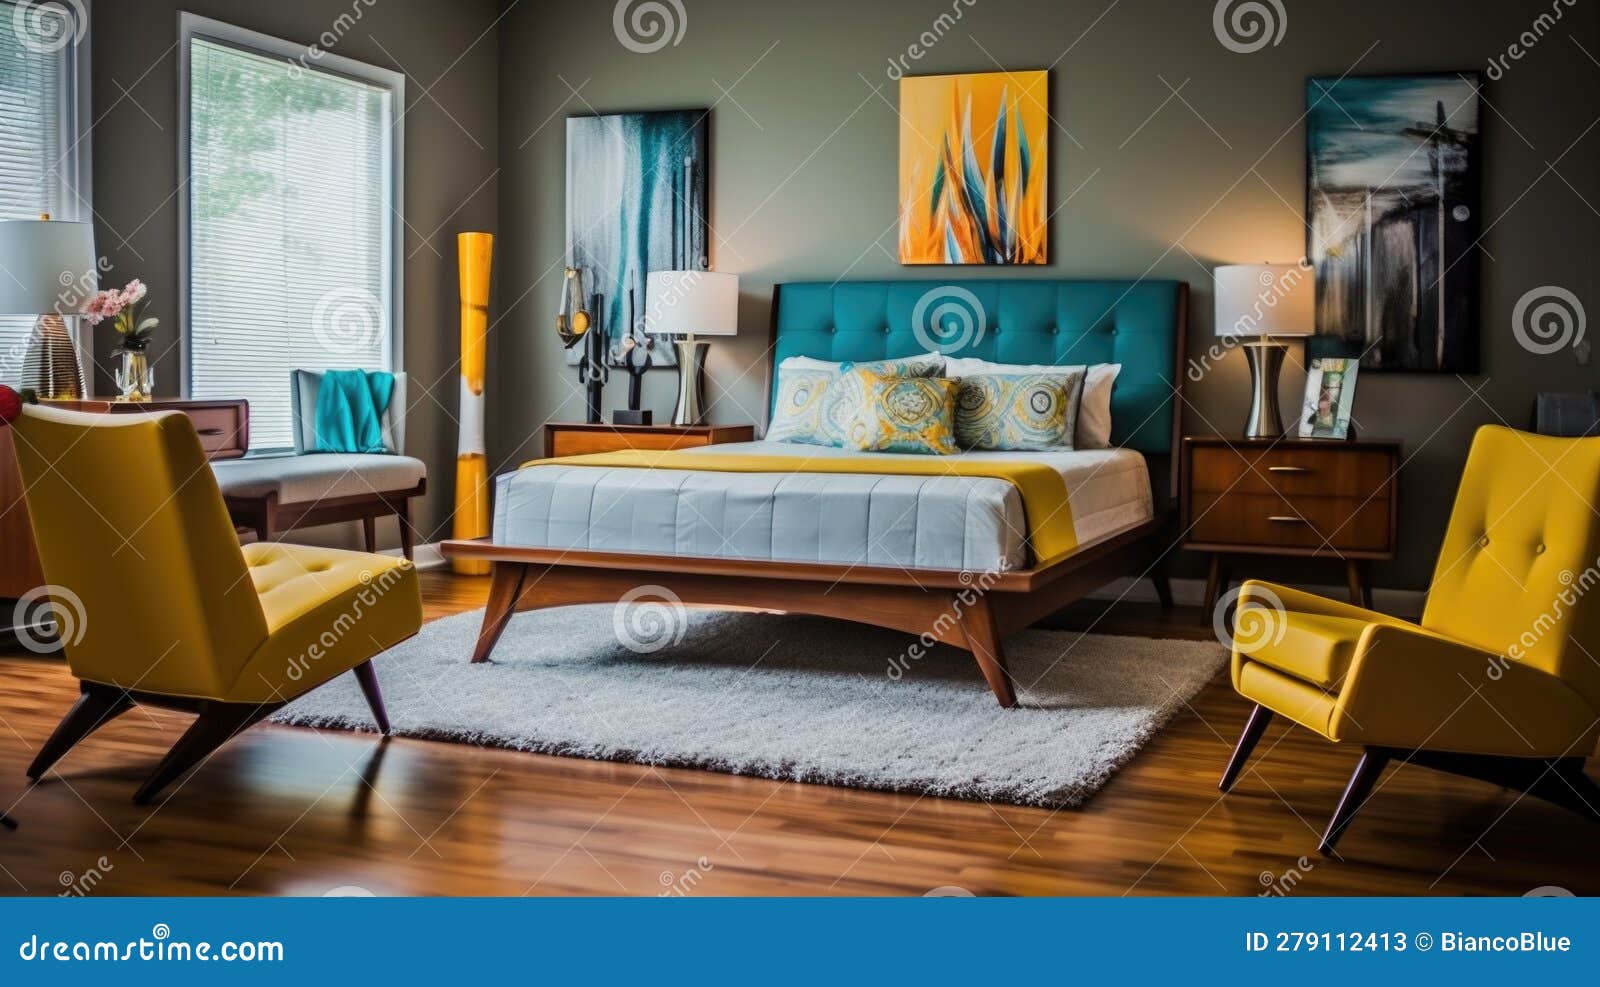 Bedroom Decor, Home Interior Design . Mid-Century Modern Retro ...